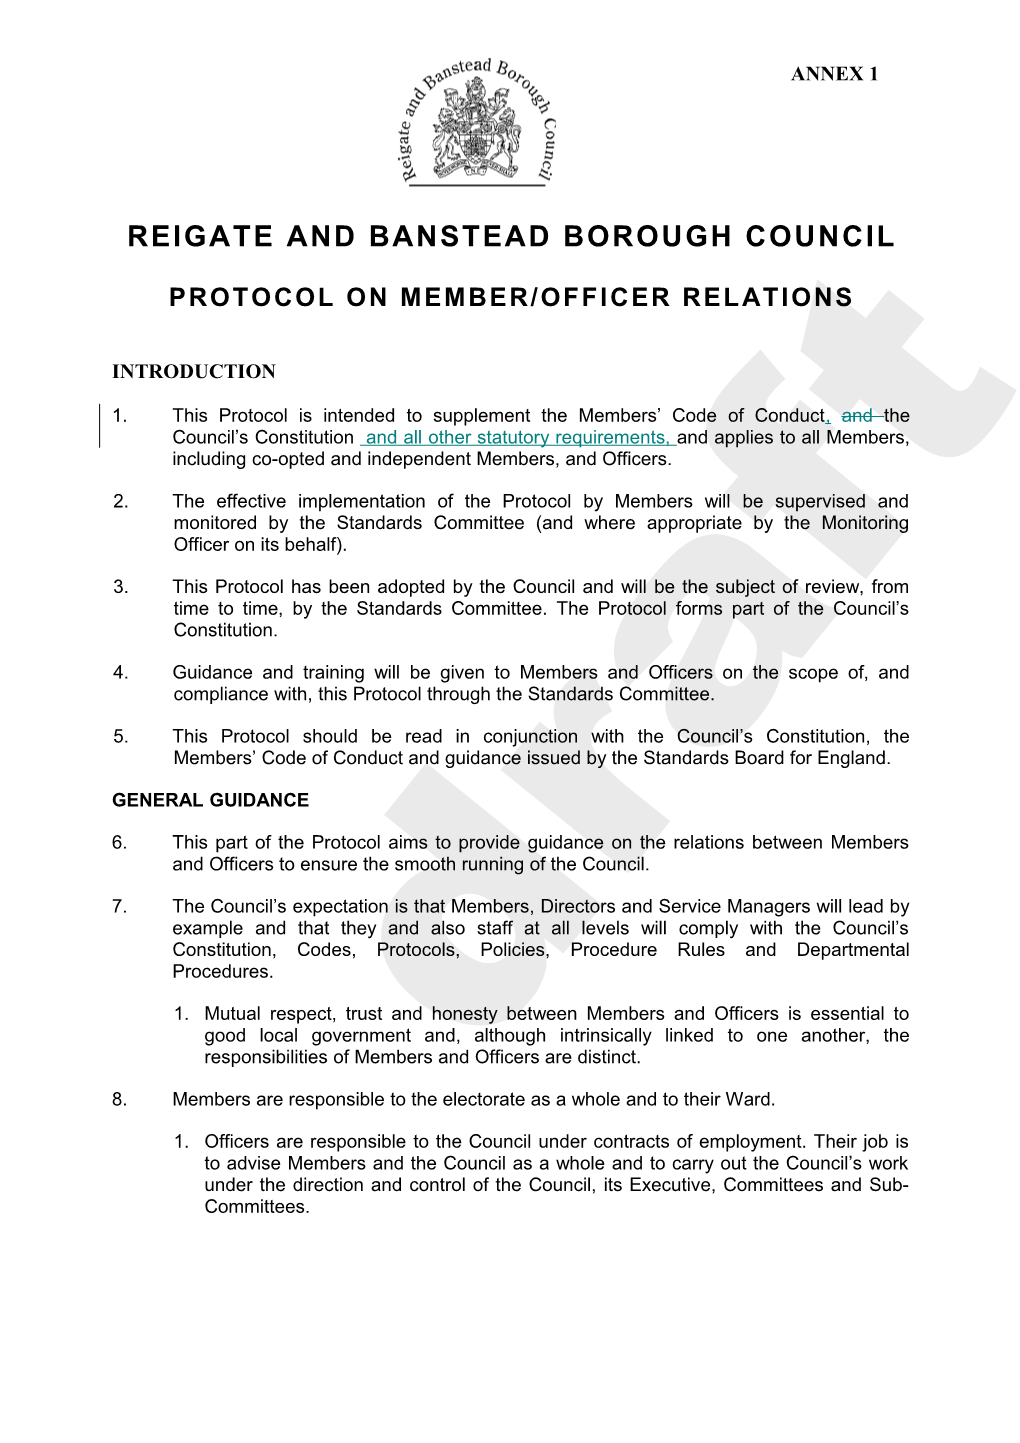 Reigate and Banstead Borough Council s2